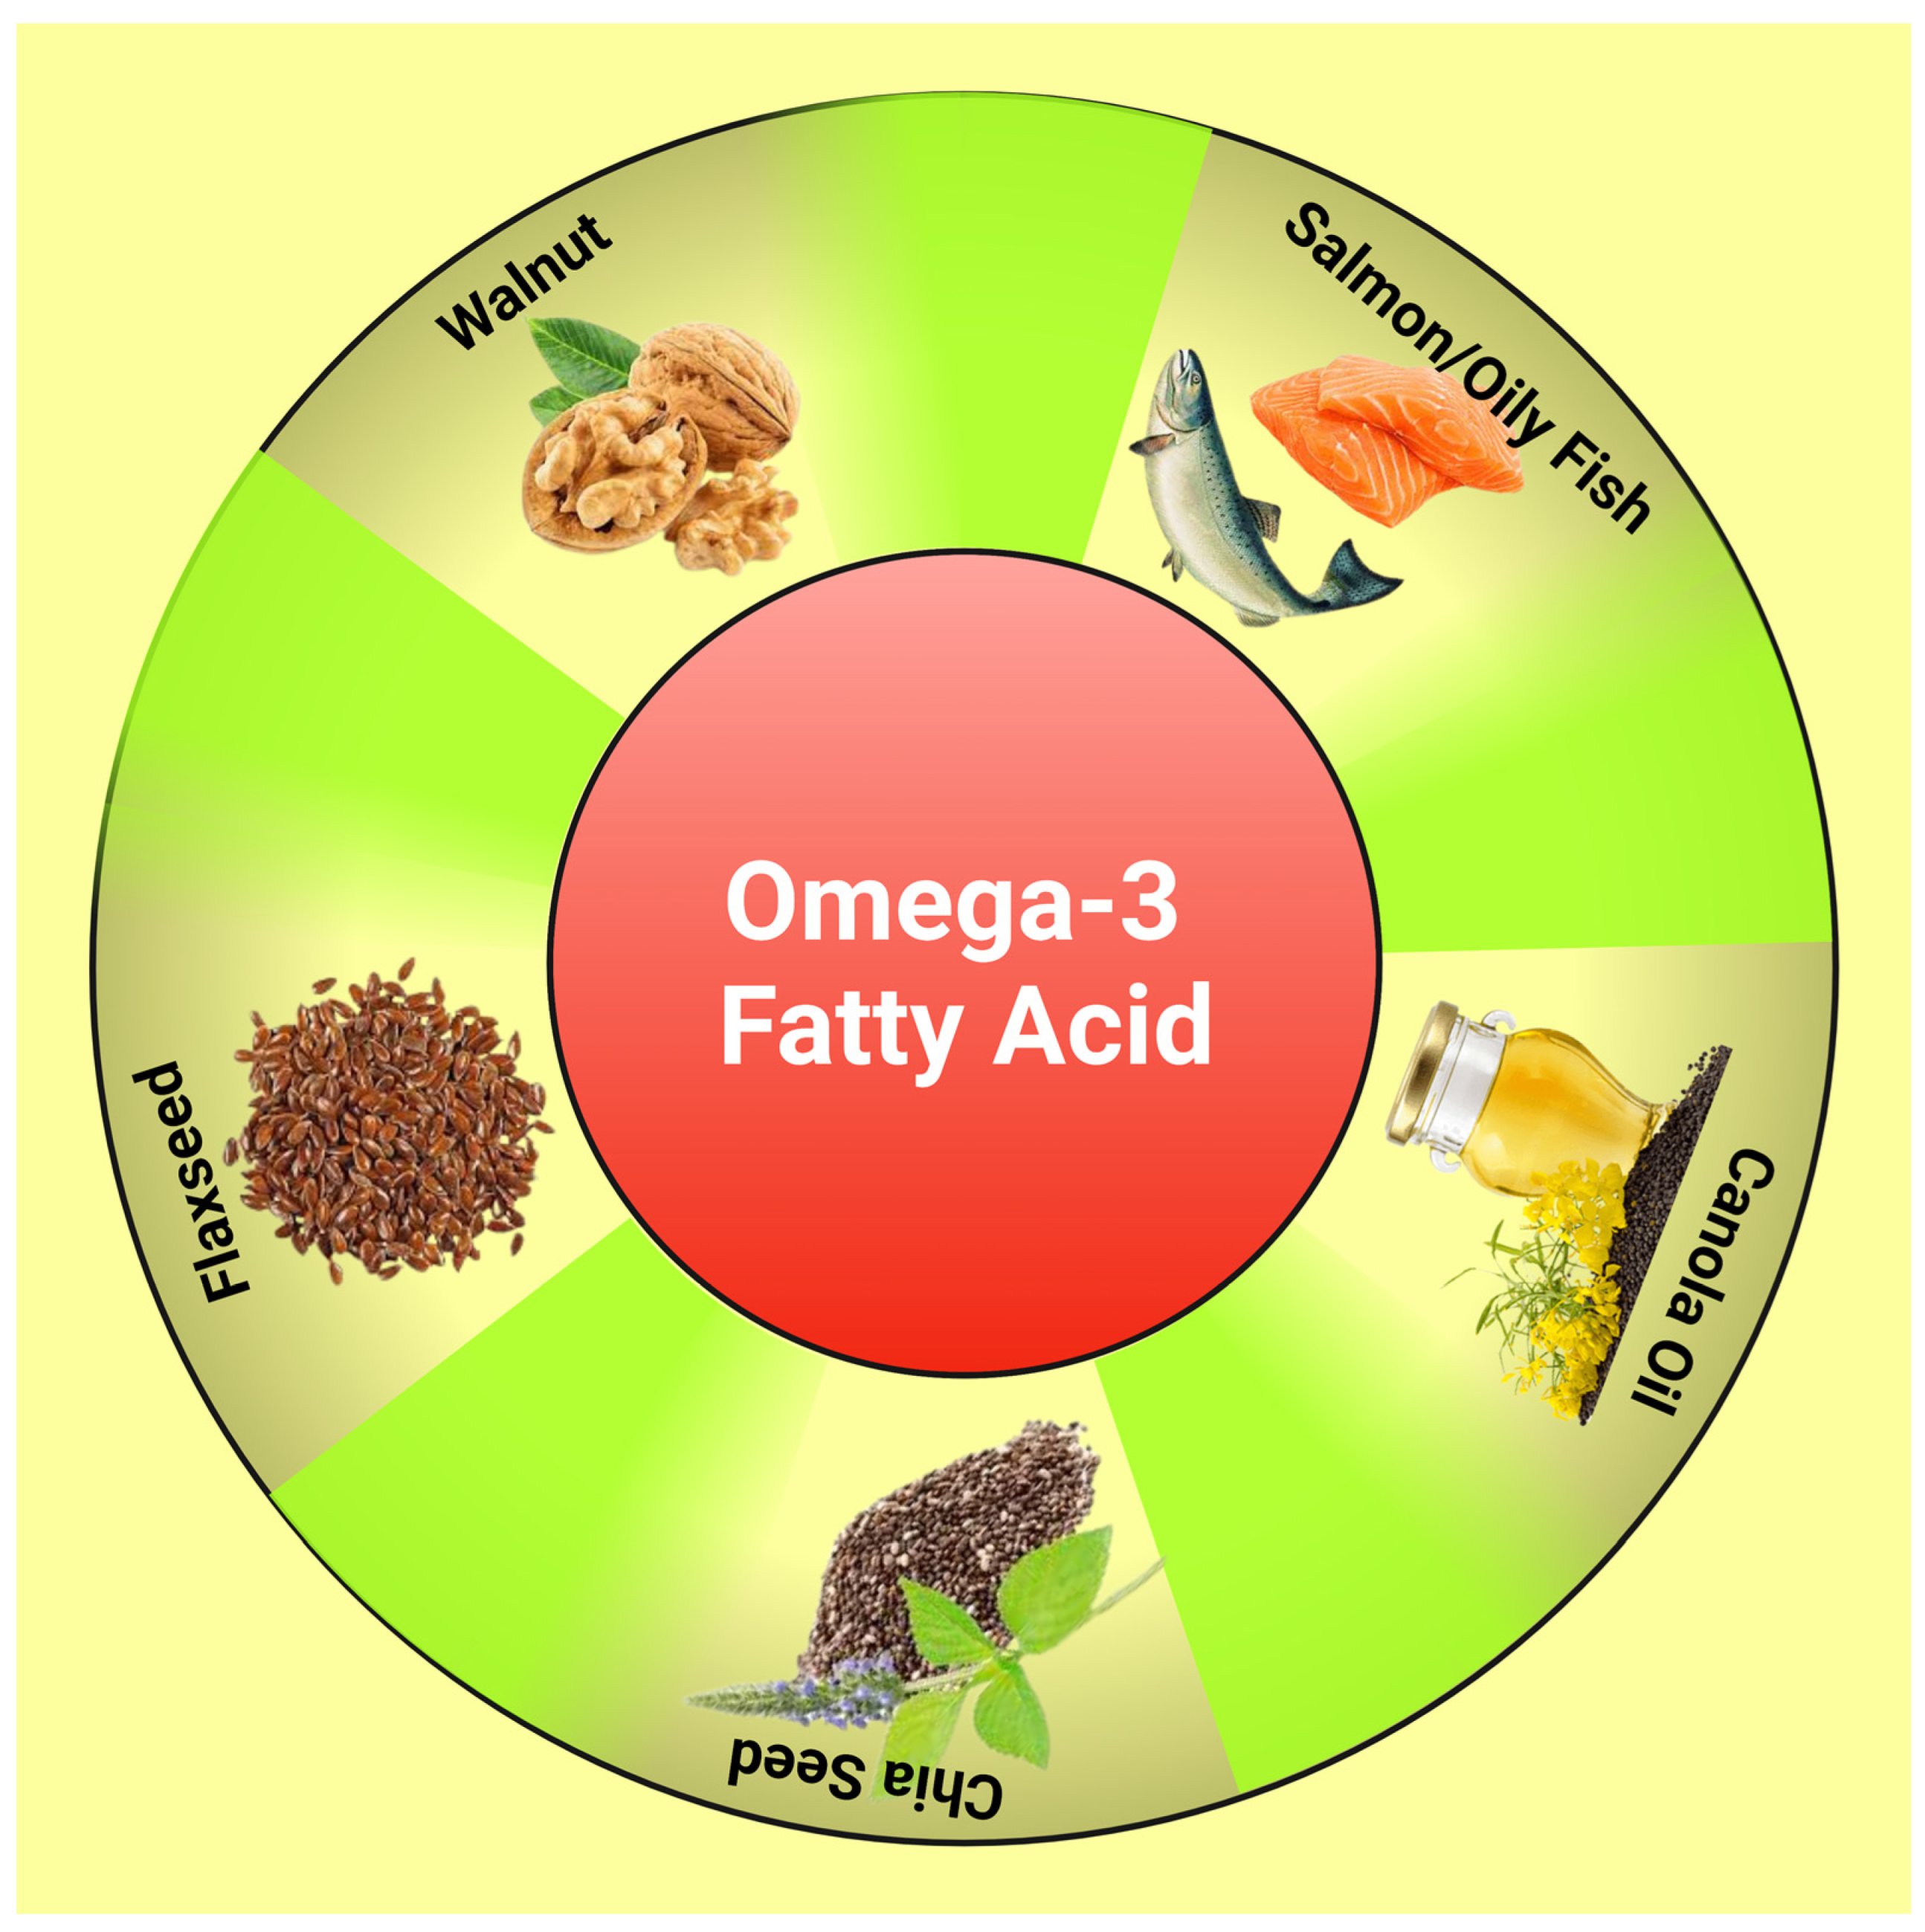 Omega- fatty acids